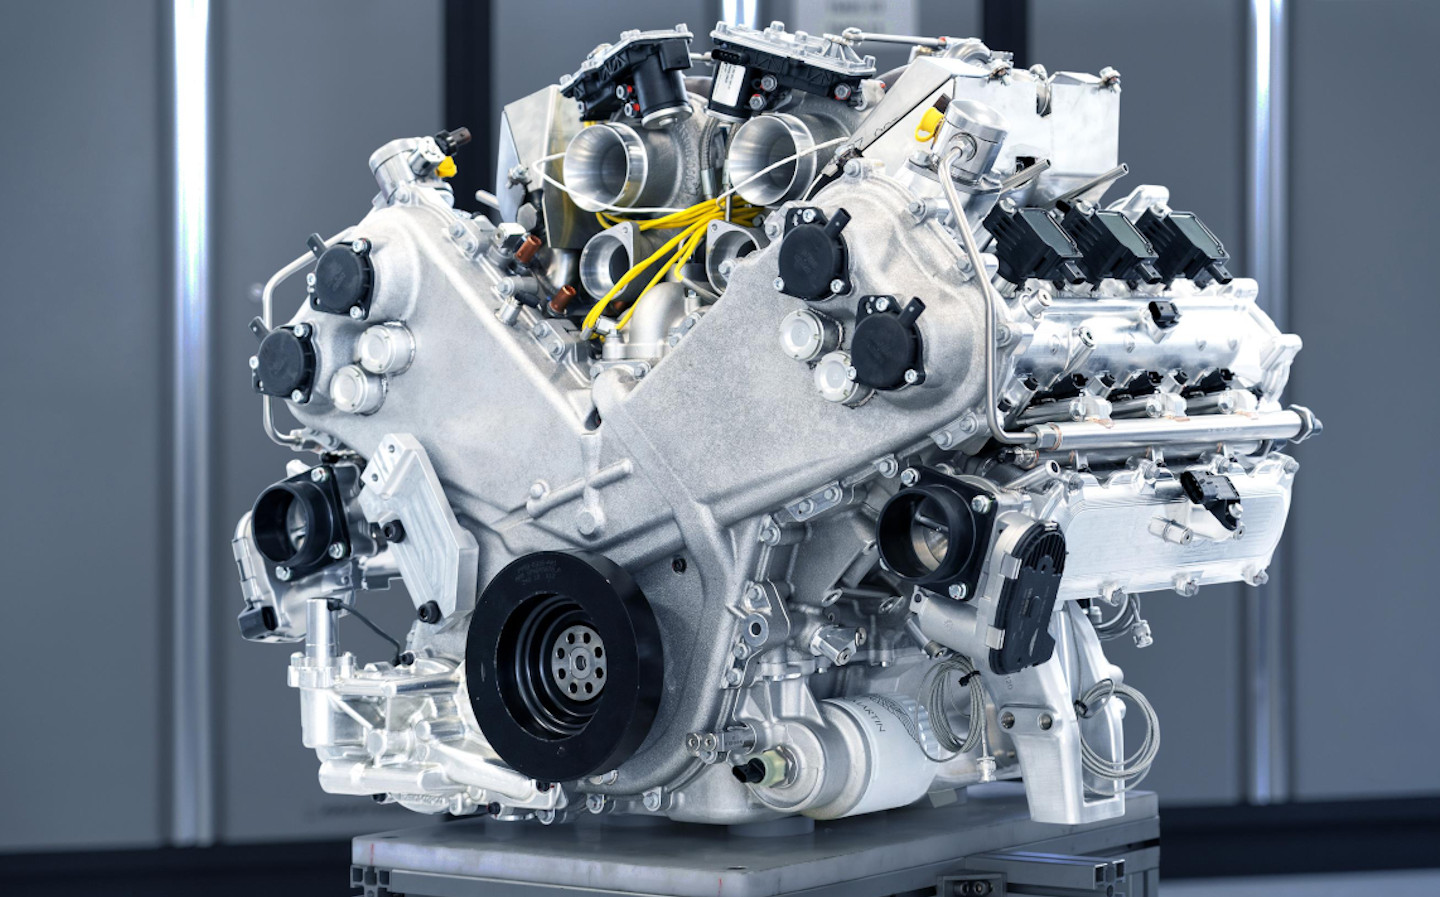 Aston Martin reveals hybrid powertrain underpinning Valhalla and future models